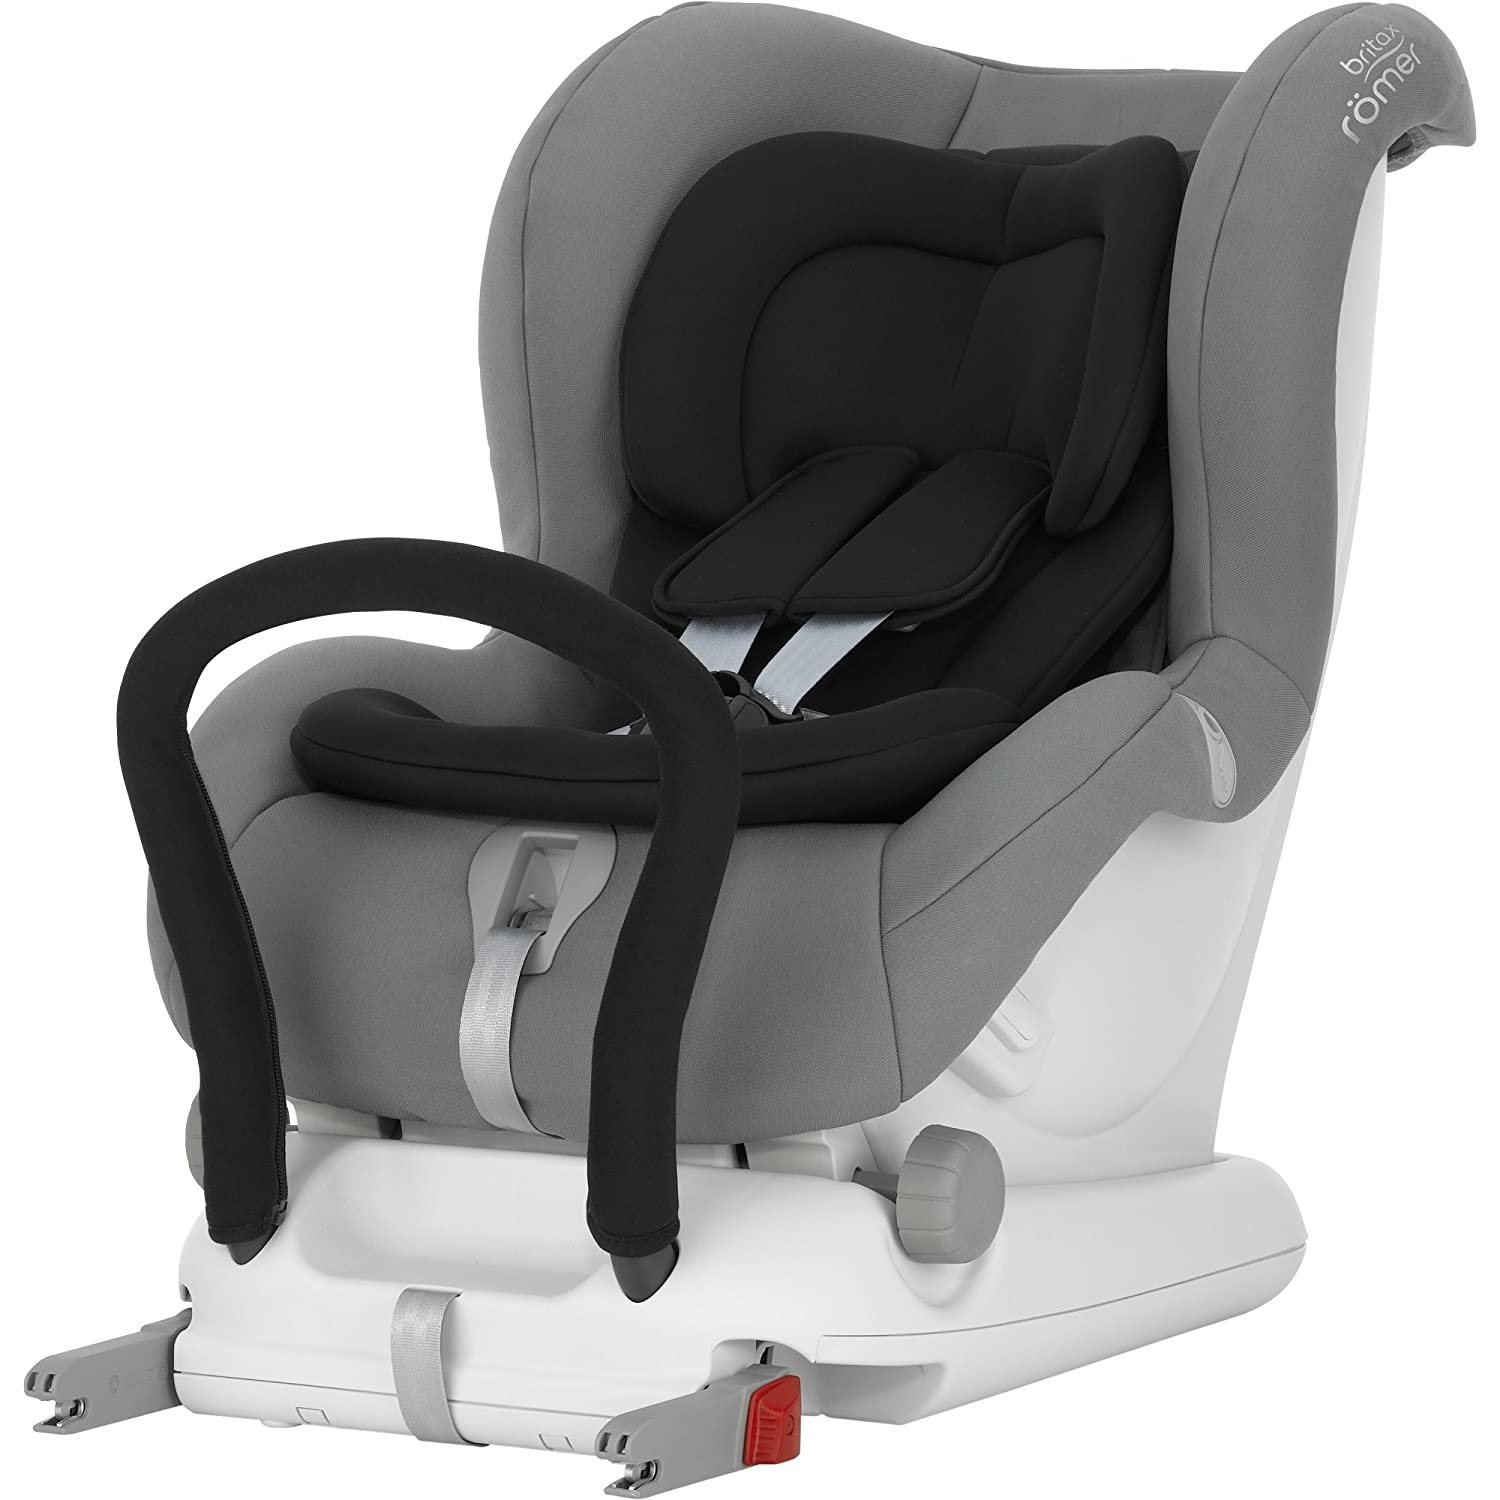 Britax Römer Child Seat 9 Months - 4 Years I 0 - 18 kg I MAX-FIX II Reboarder Car Seat Group 0+/1 I Steel Grey